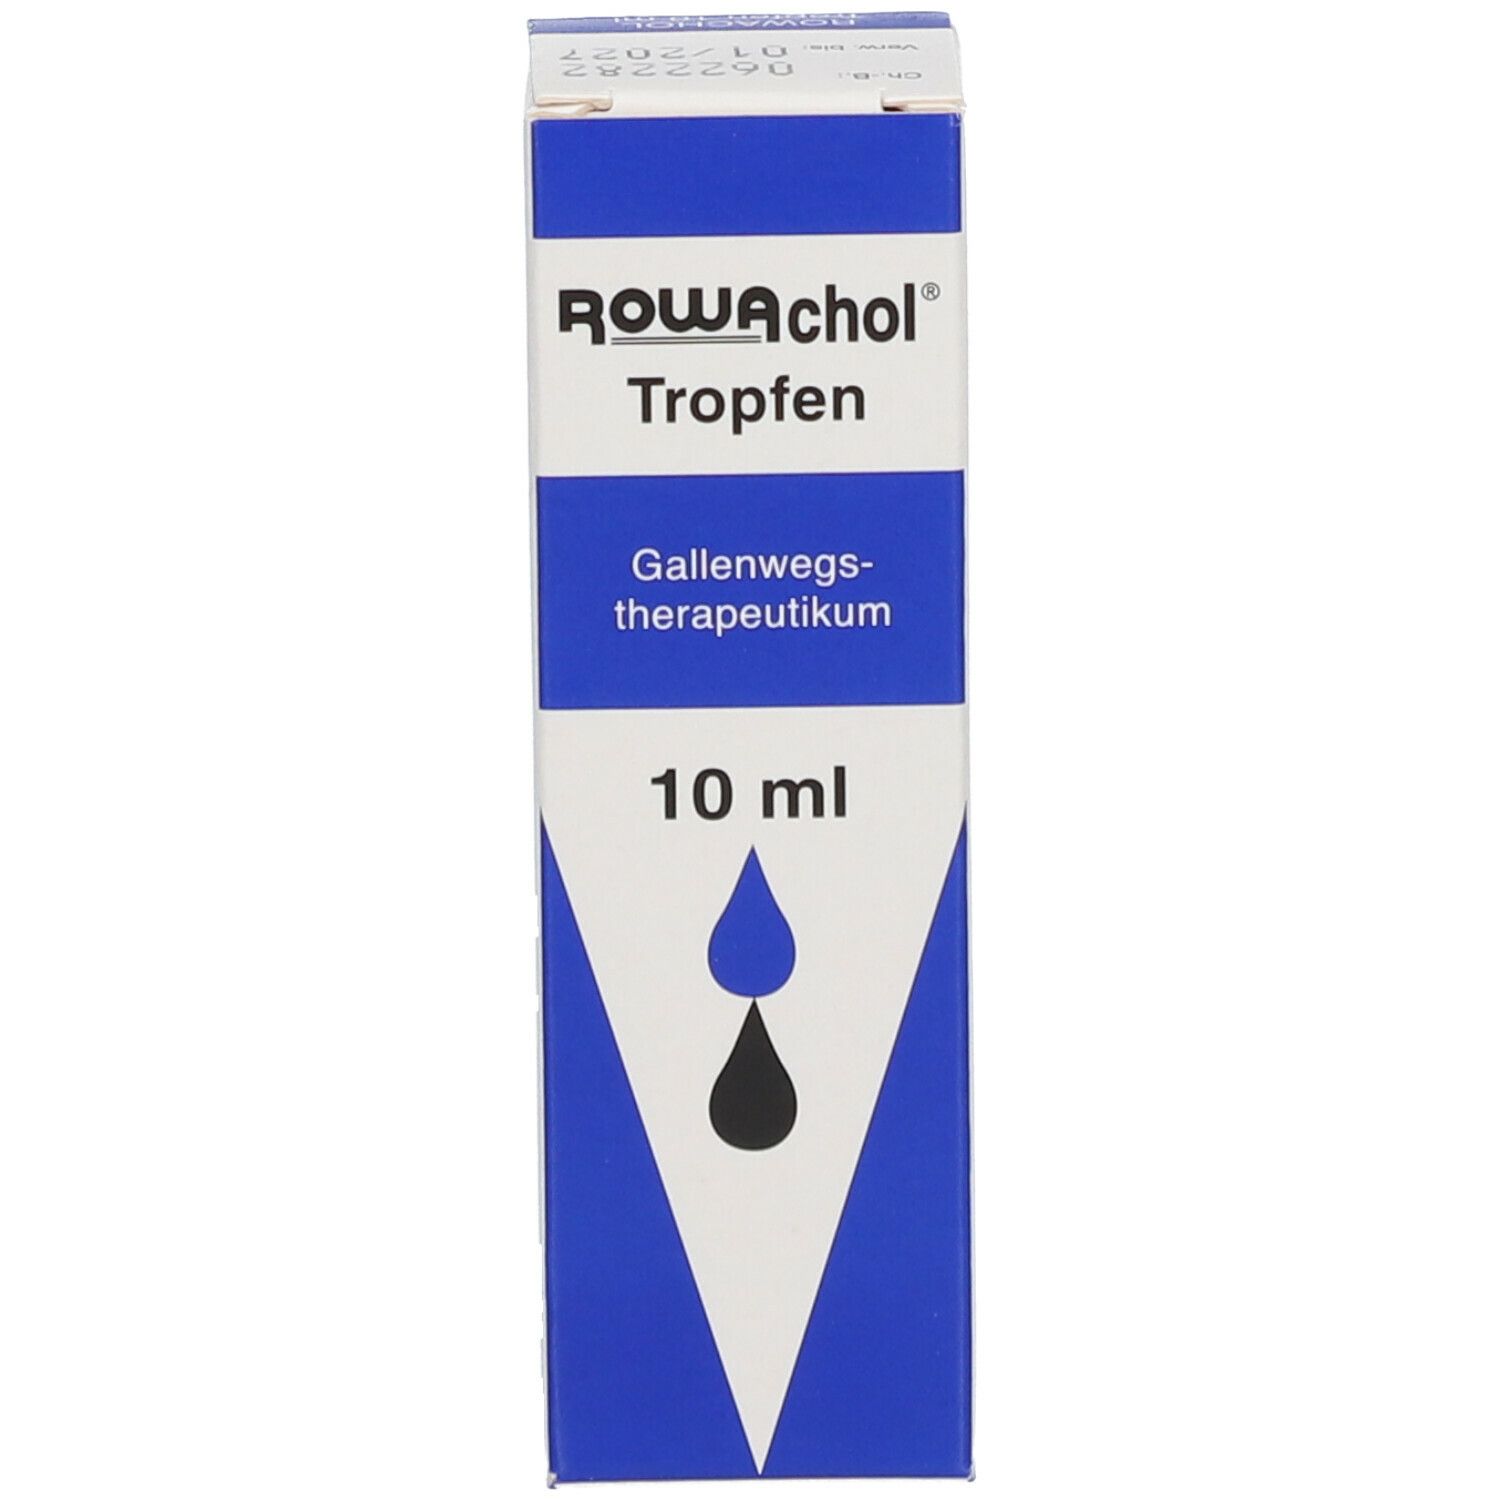 Rowachol® Tropfen